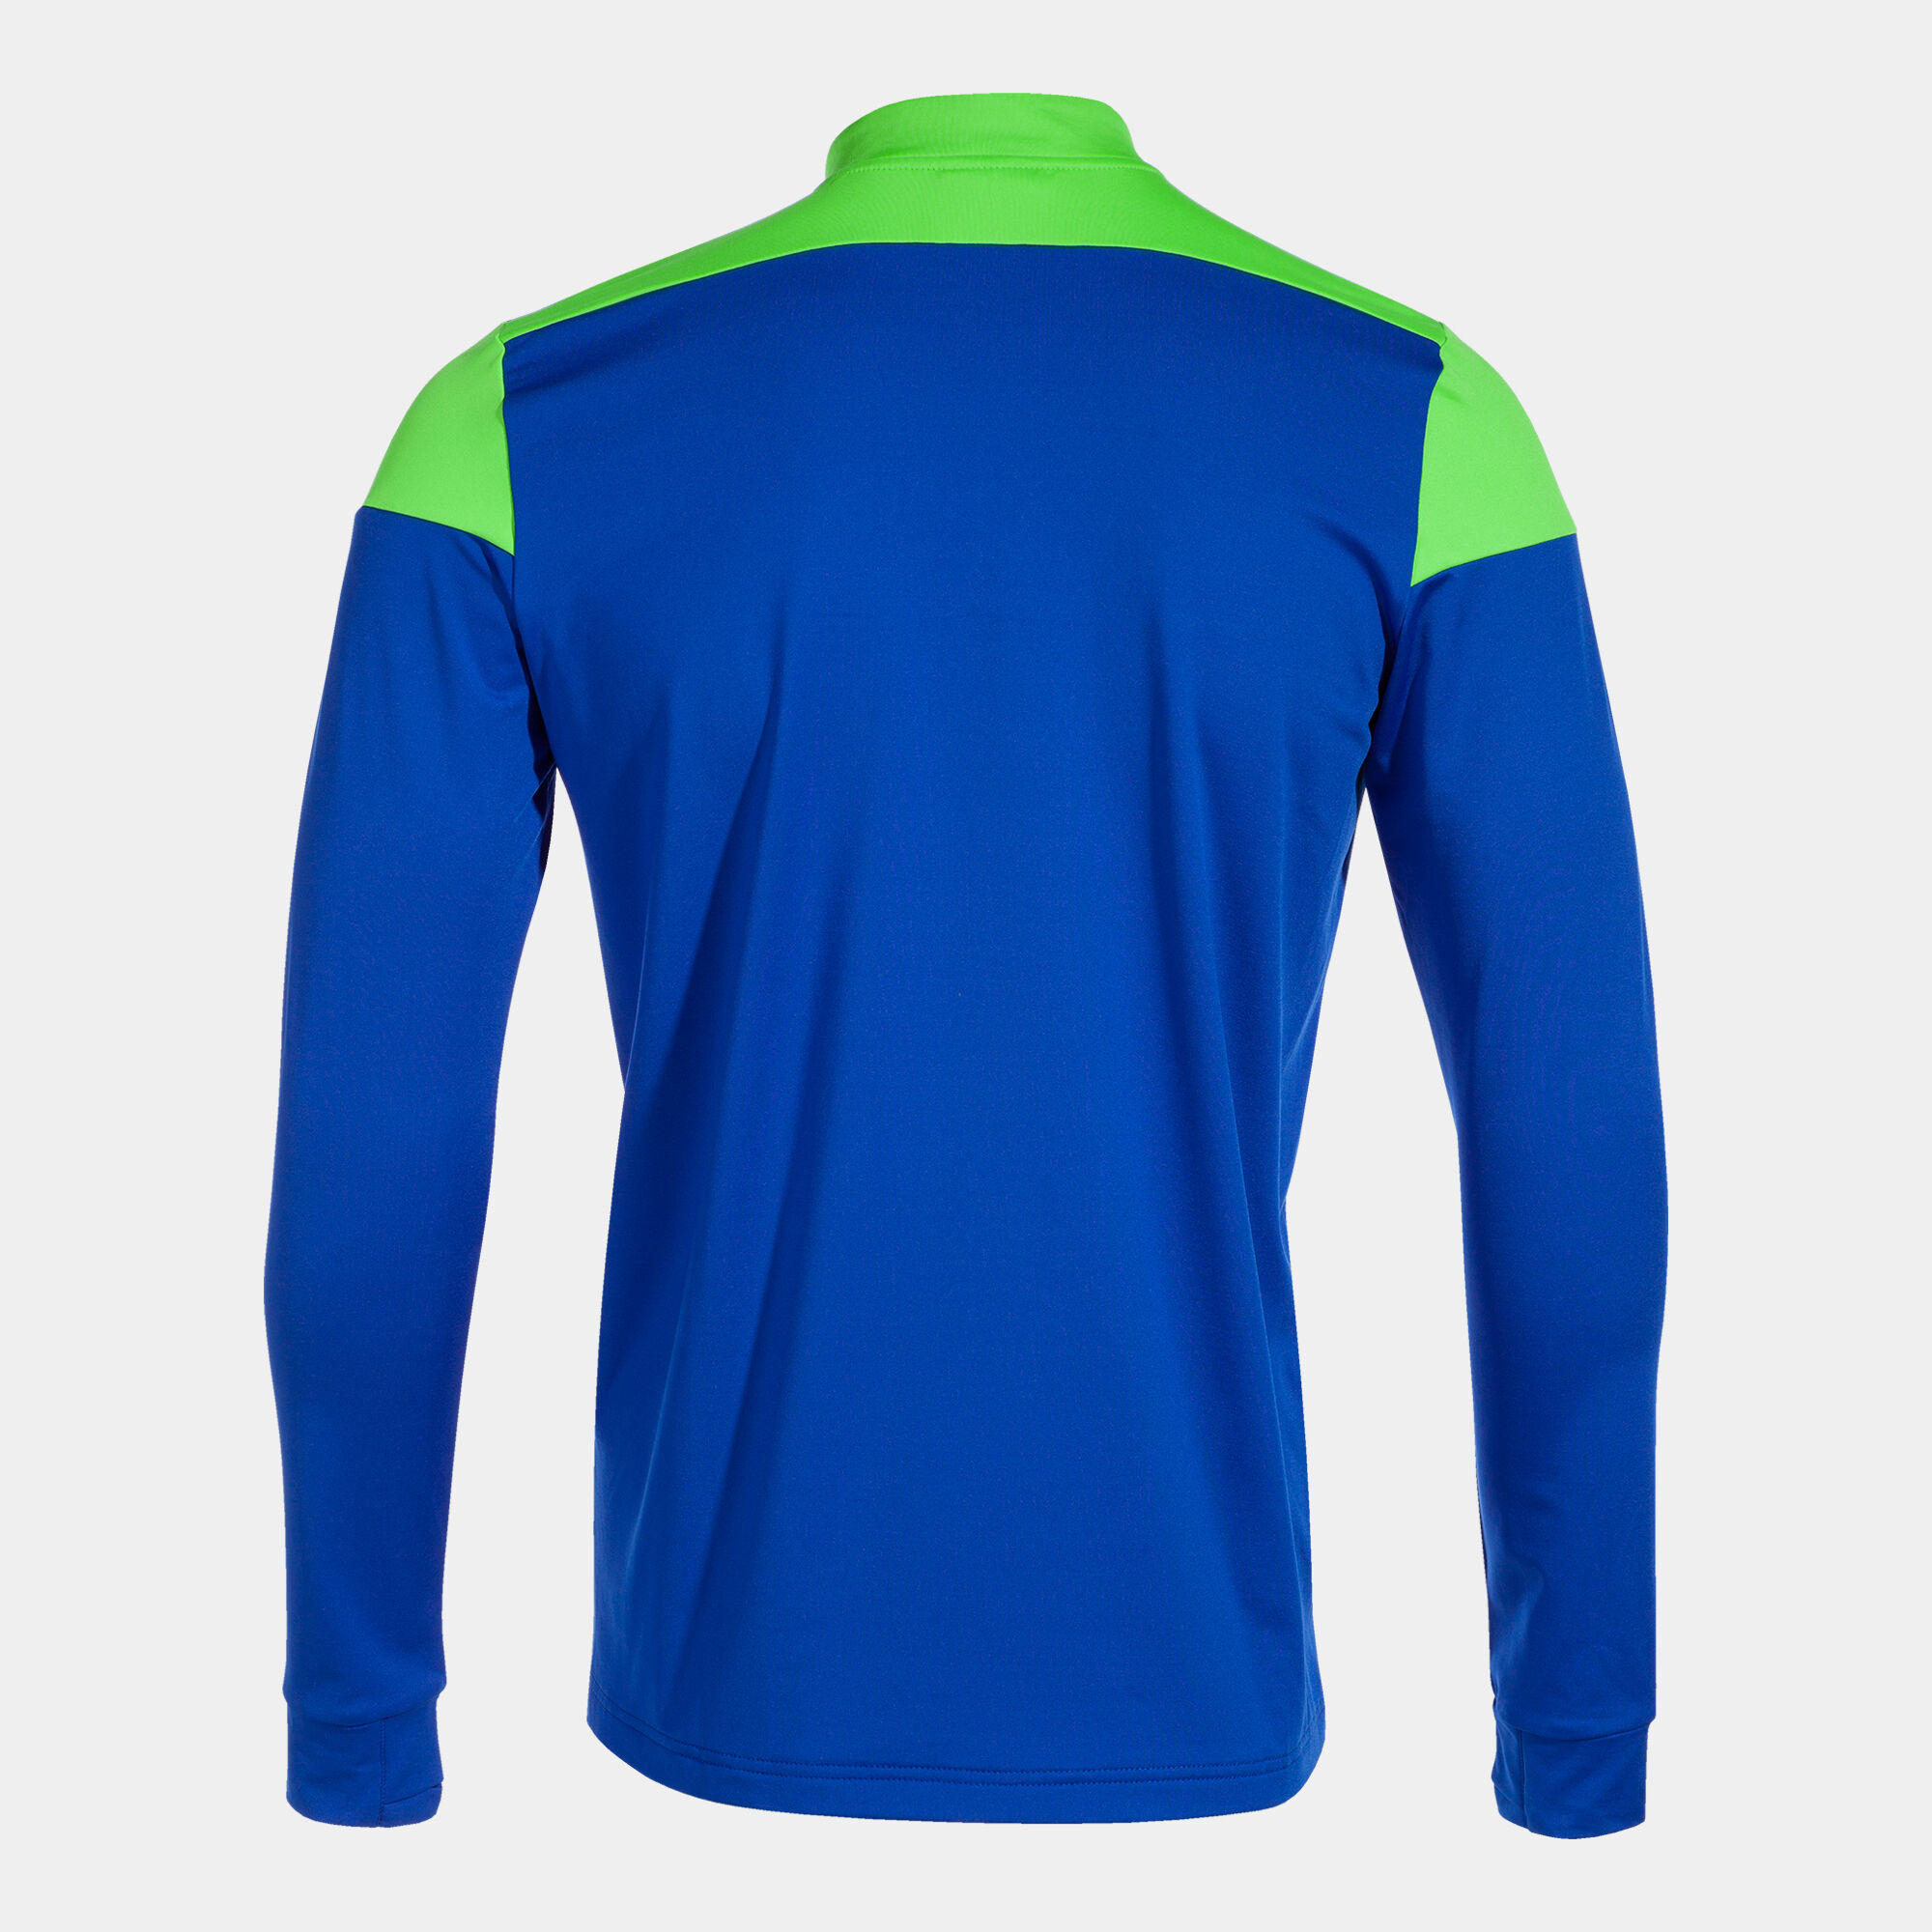 Sweatshirt man Elite X royal blue fluorescent green